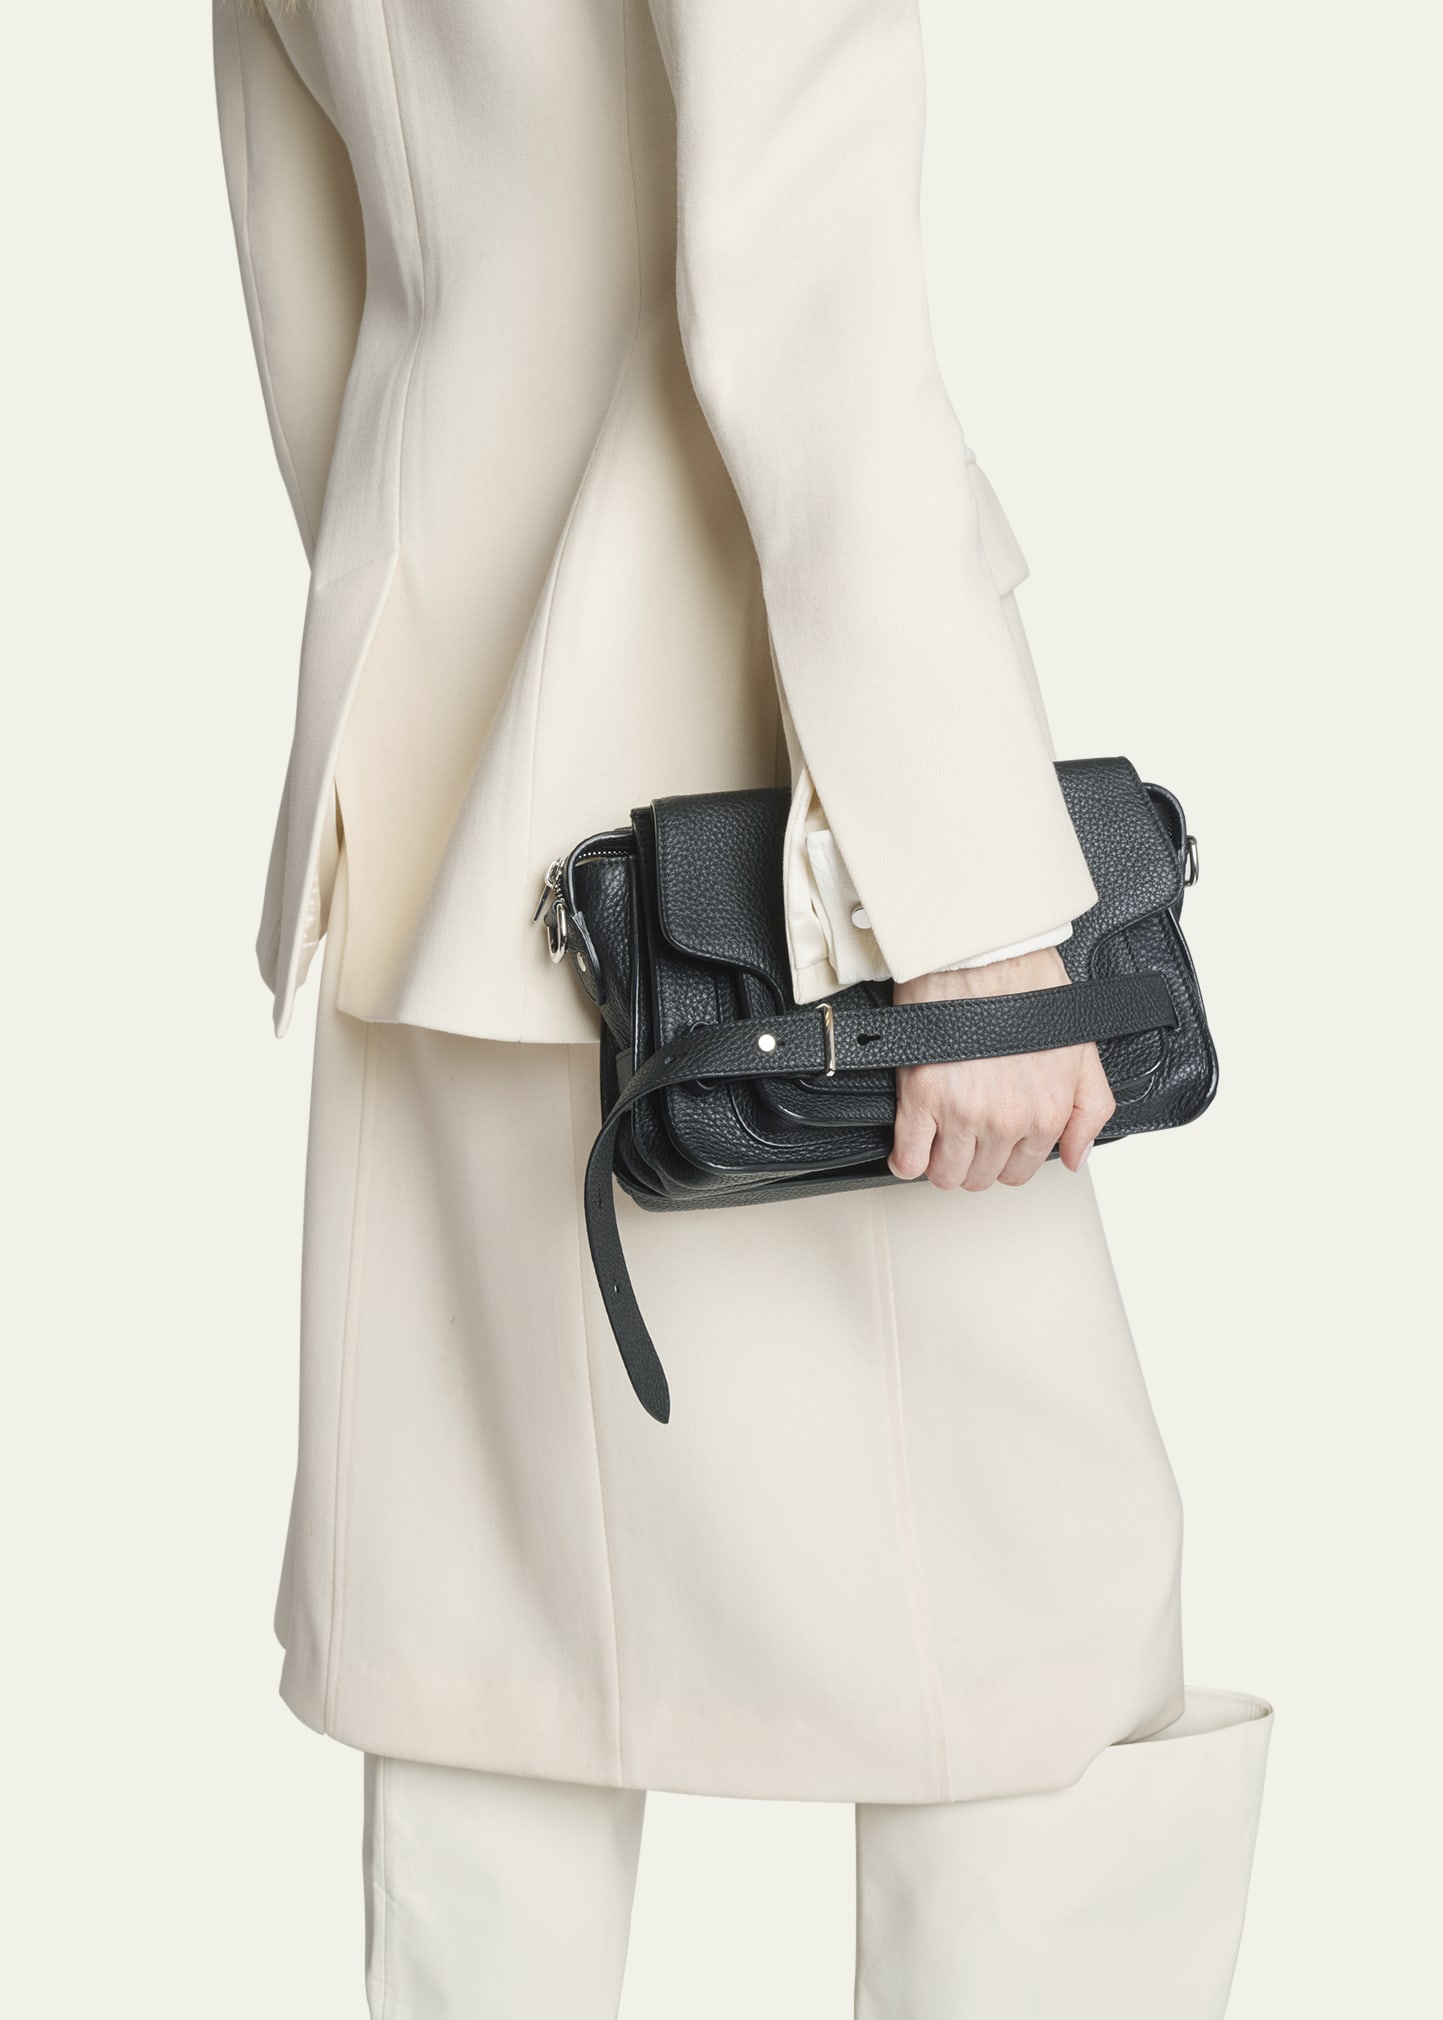 WD5484) Side Bags for Women Designer Handbags Sale Black Cross